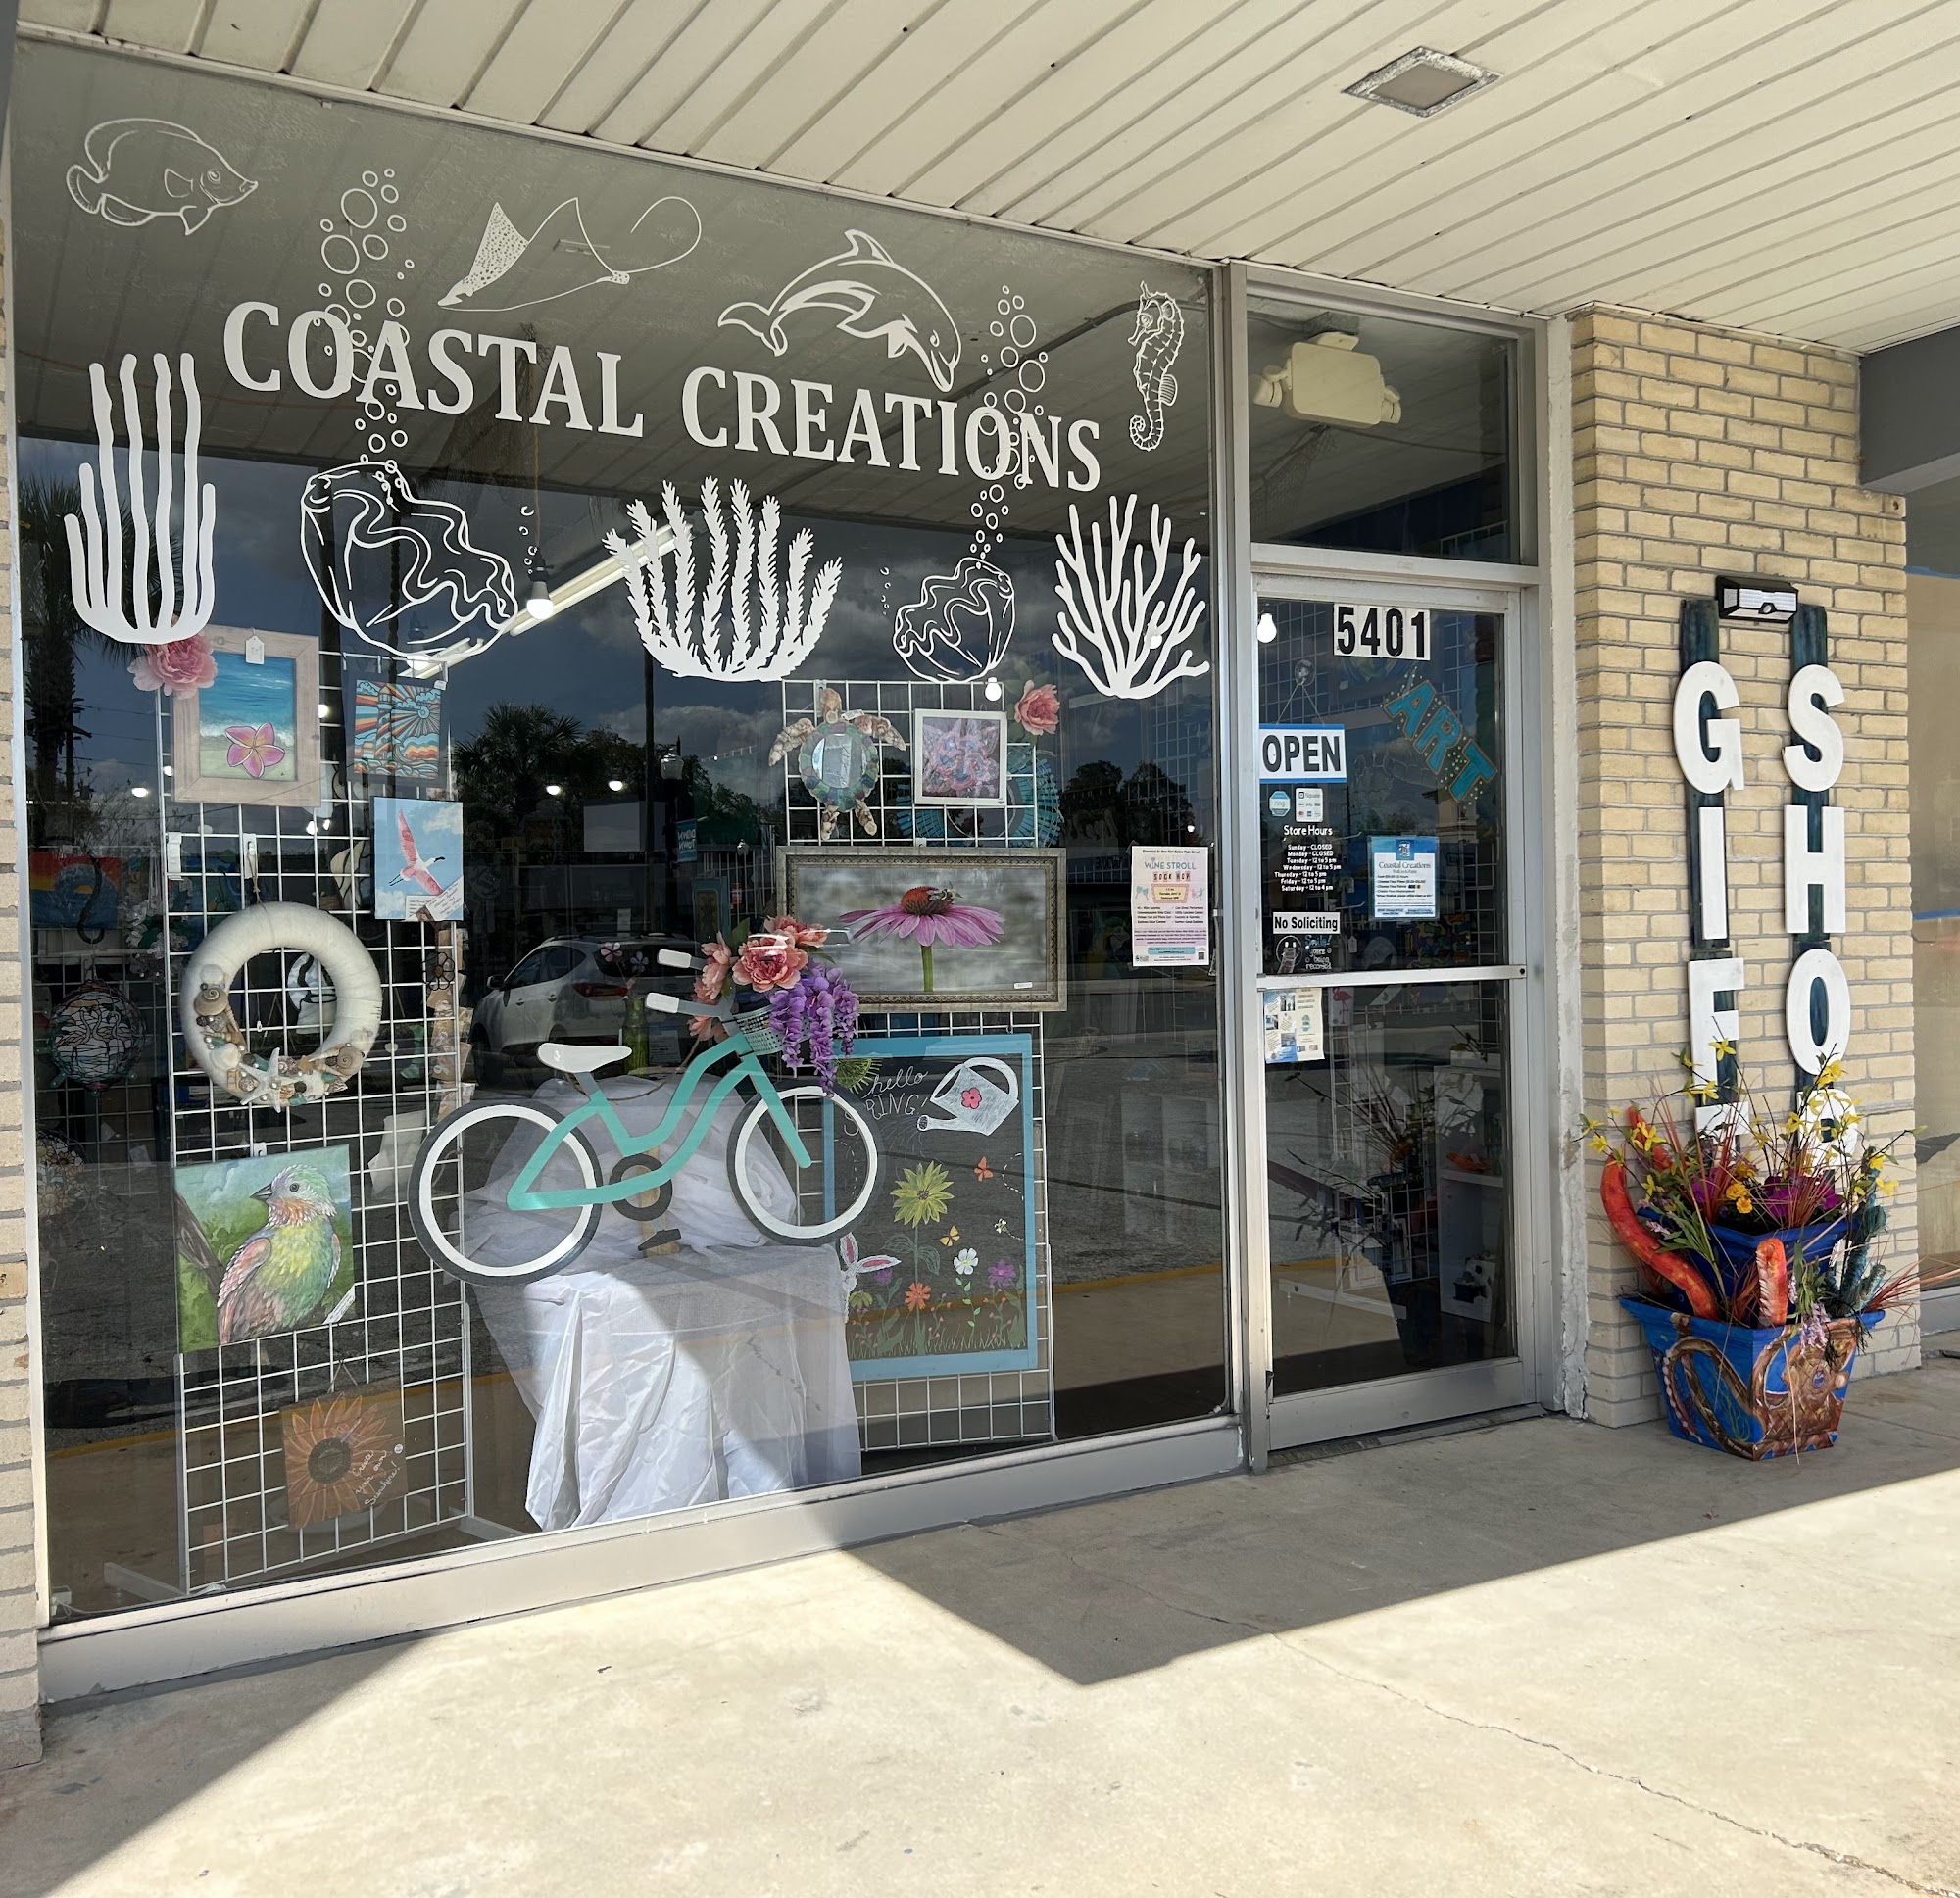 Coastal Creations